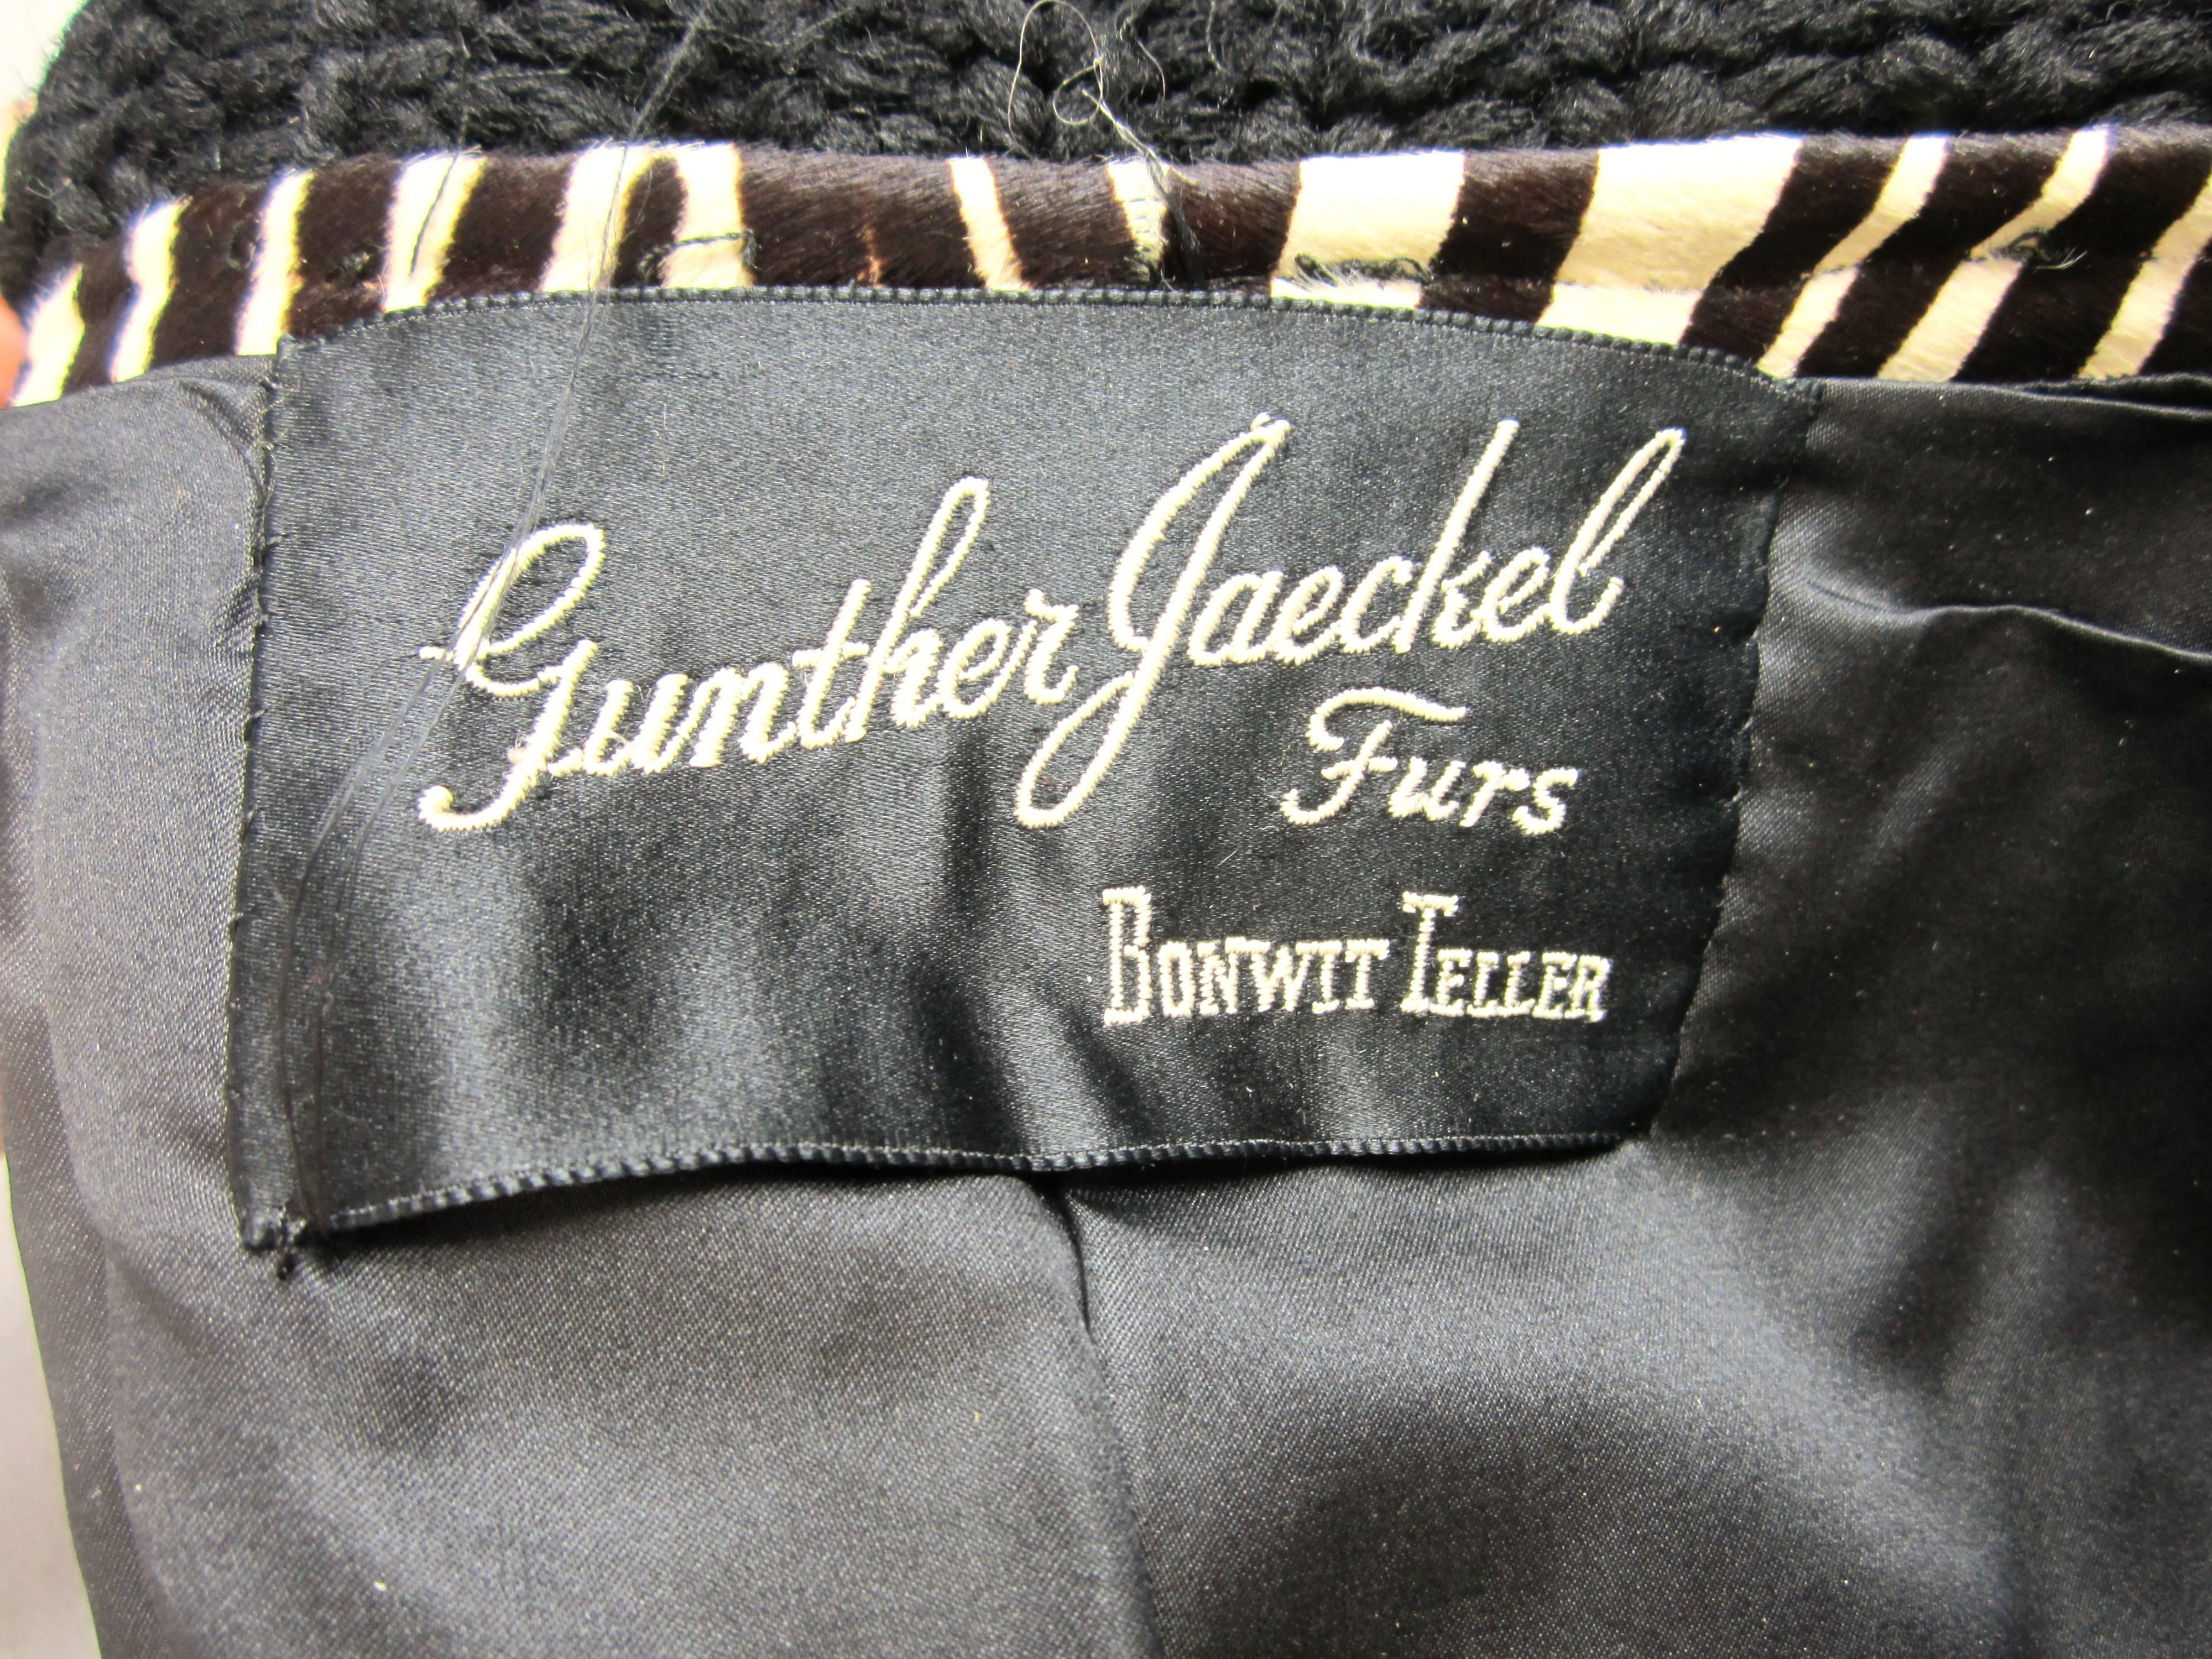  Printed Pony Jacket Gunther Jaeckel Furs For Bonwitt Teller  For Sale 1